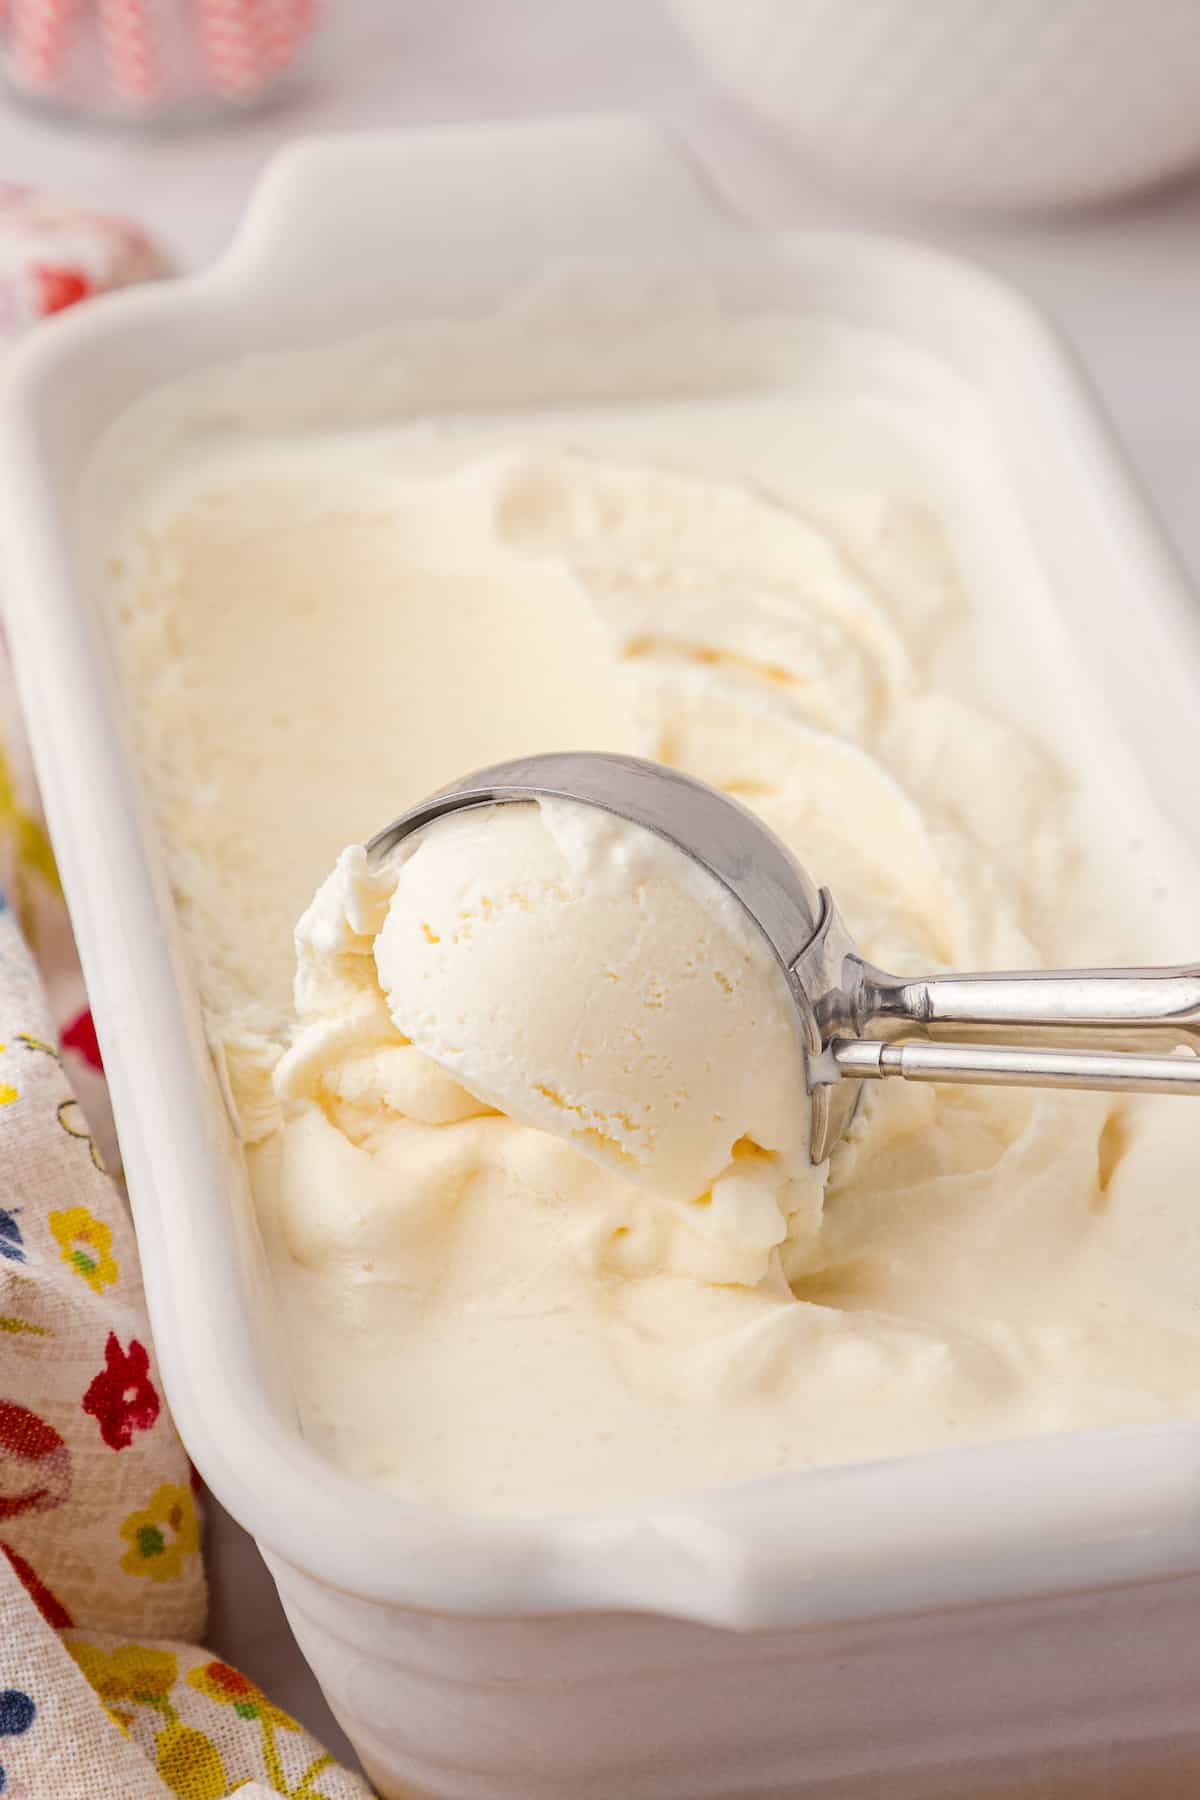 a scoop of homemade vanilla ice cream